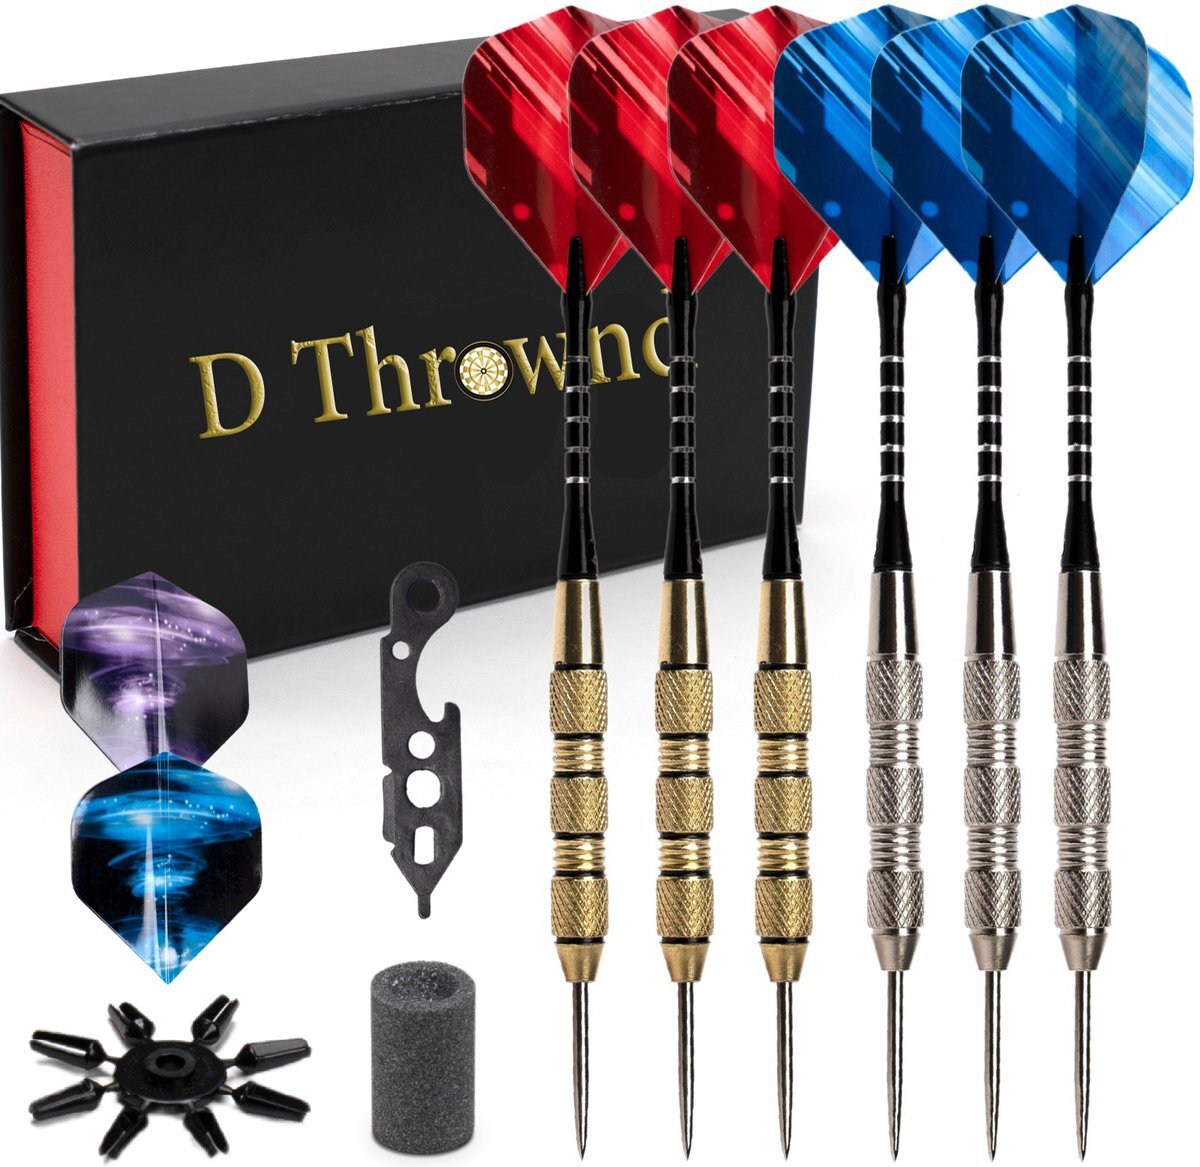 D Thrownd Dartpijlen 24 gram - Darts set - extra Dart flights en Shafts - Inclusief Magnetische Dartscase